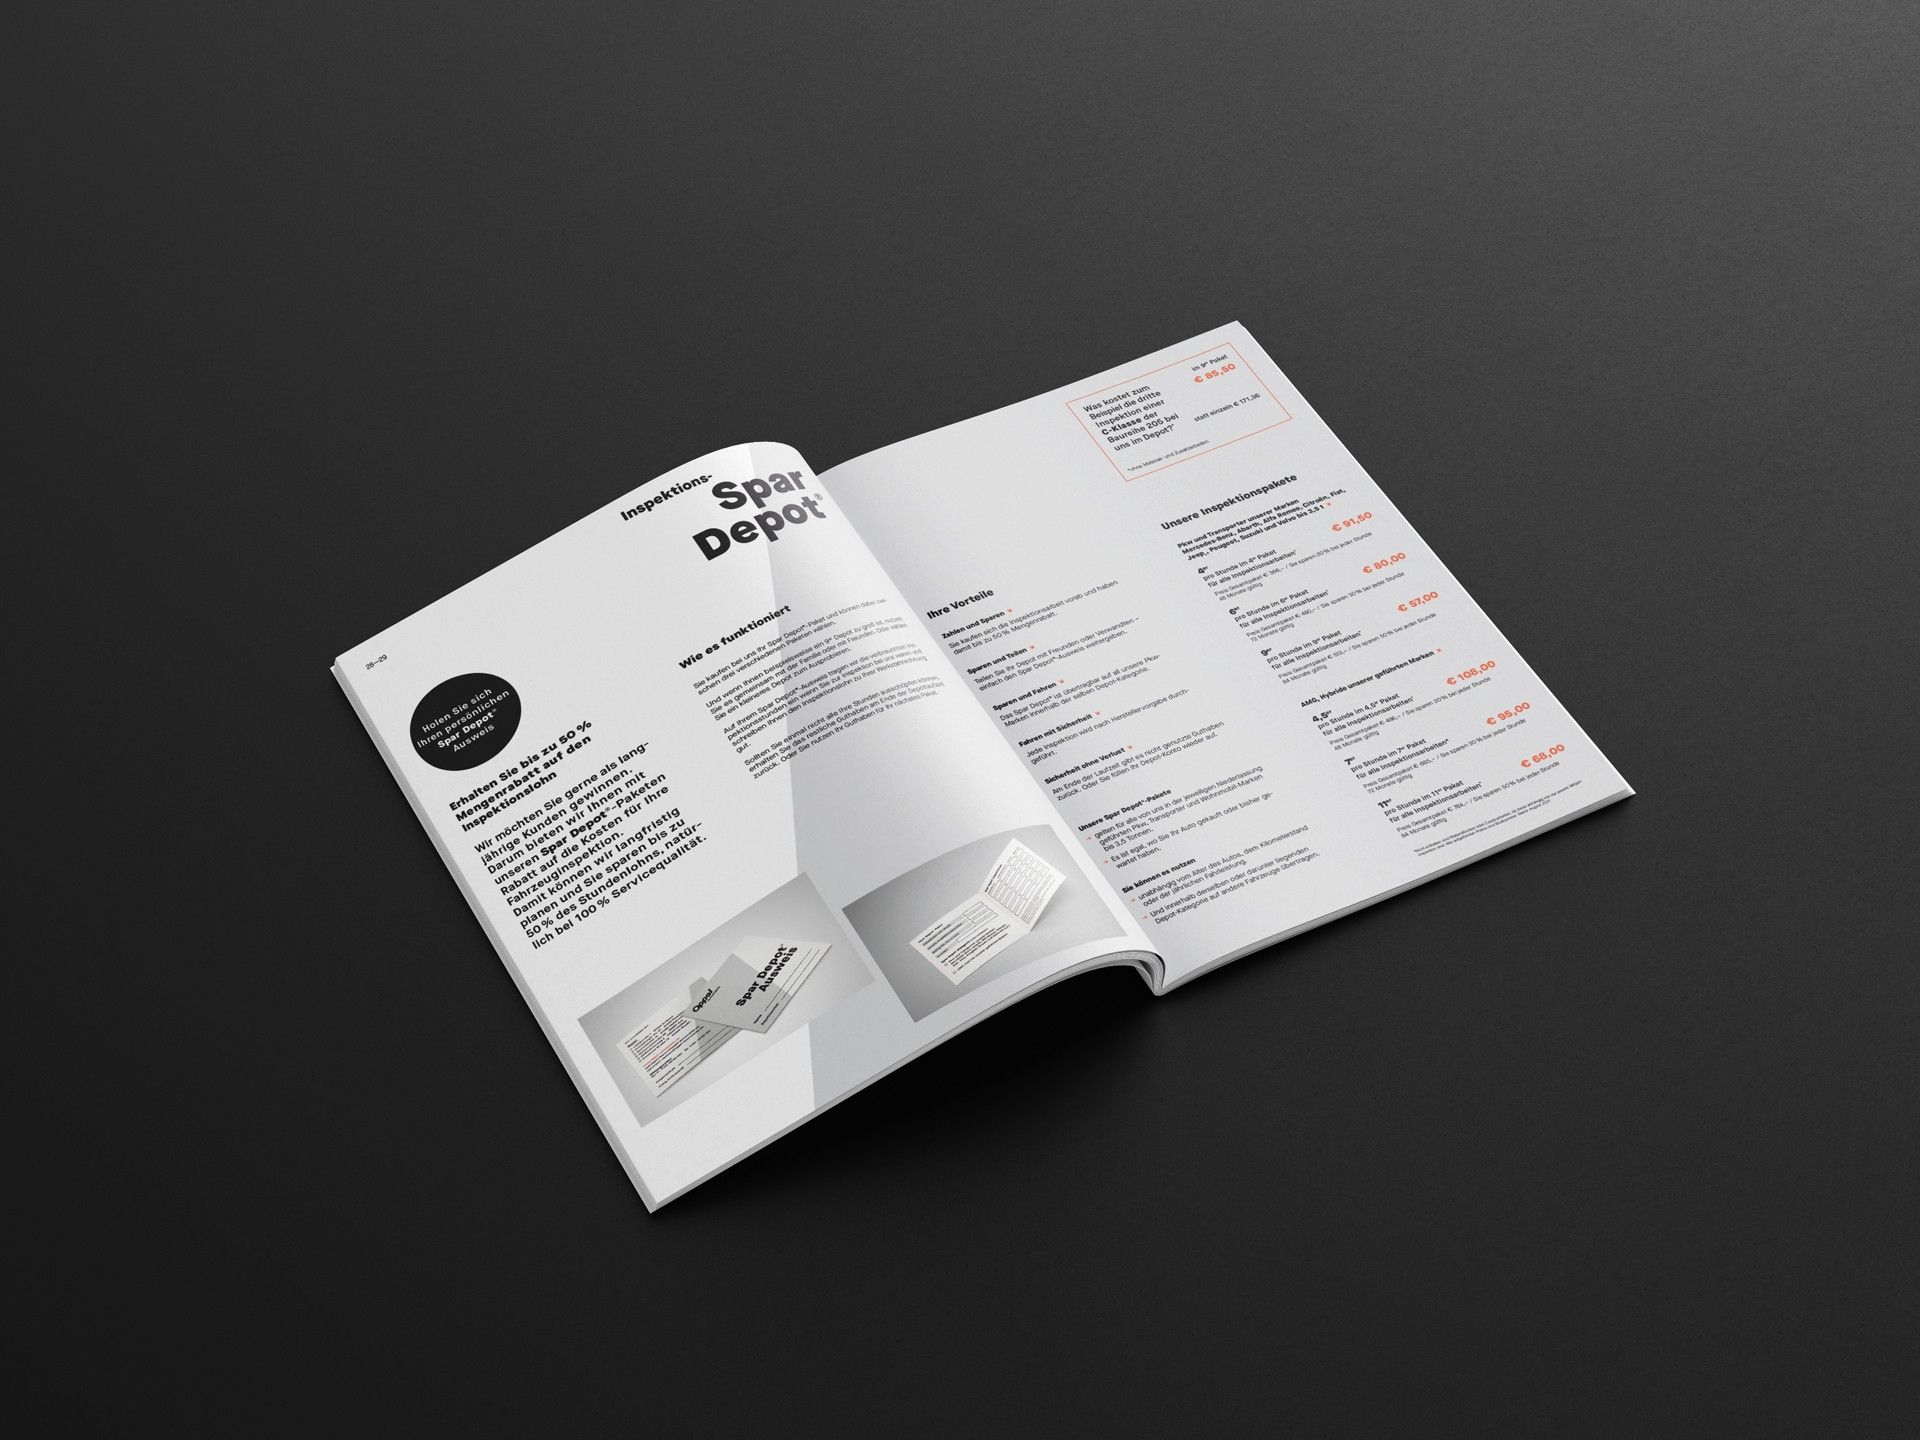 Oppel Automobile – Corporate Design Autohaus, Kundenmagazin Editorial Doppelseite